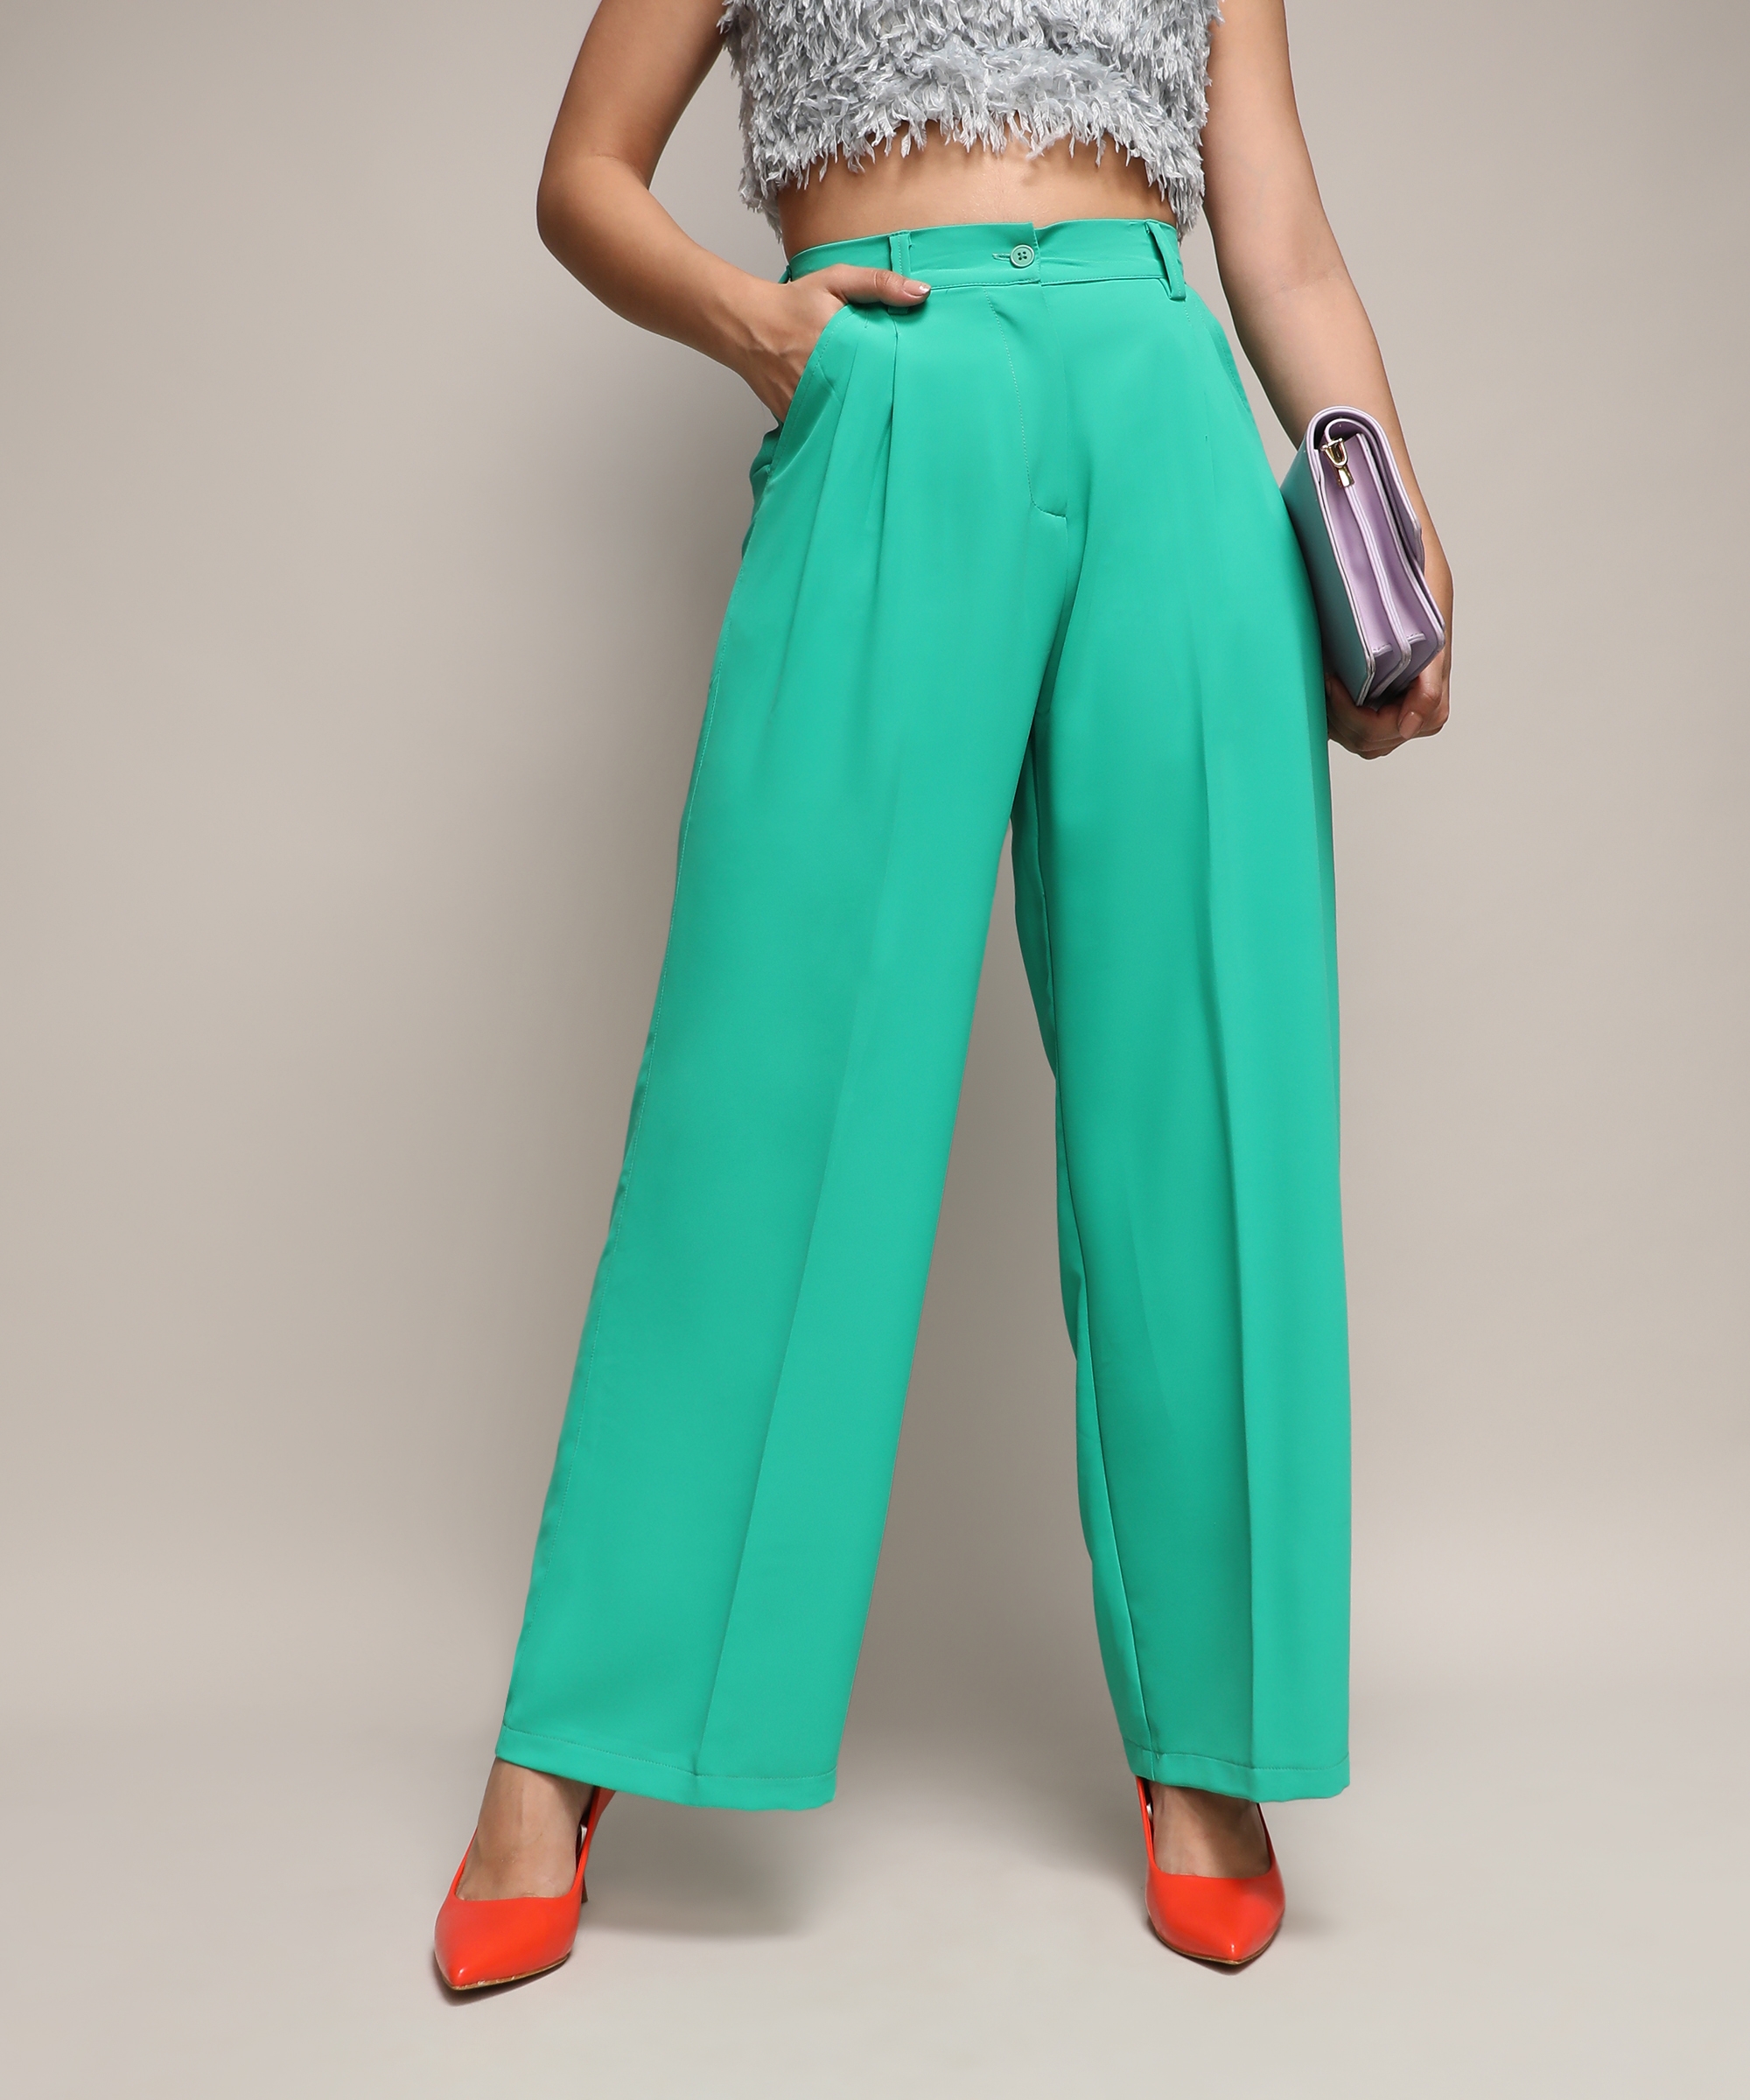 CAMPUS SUTRA | Women's Aqua Green Solid Trouser